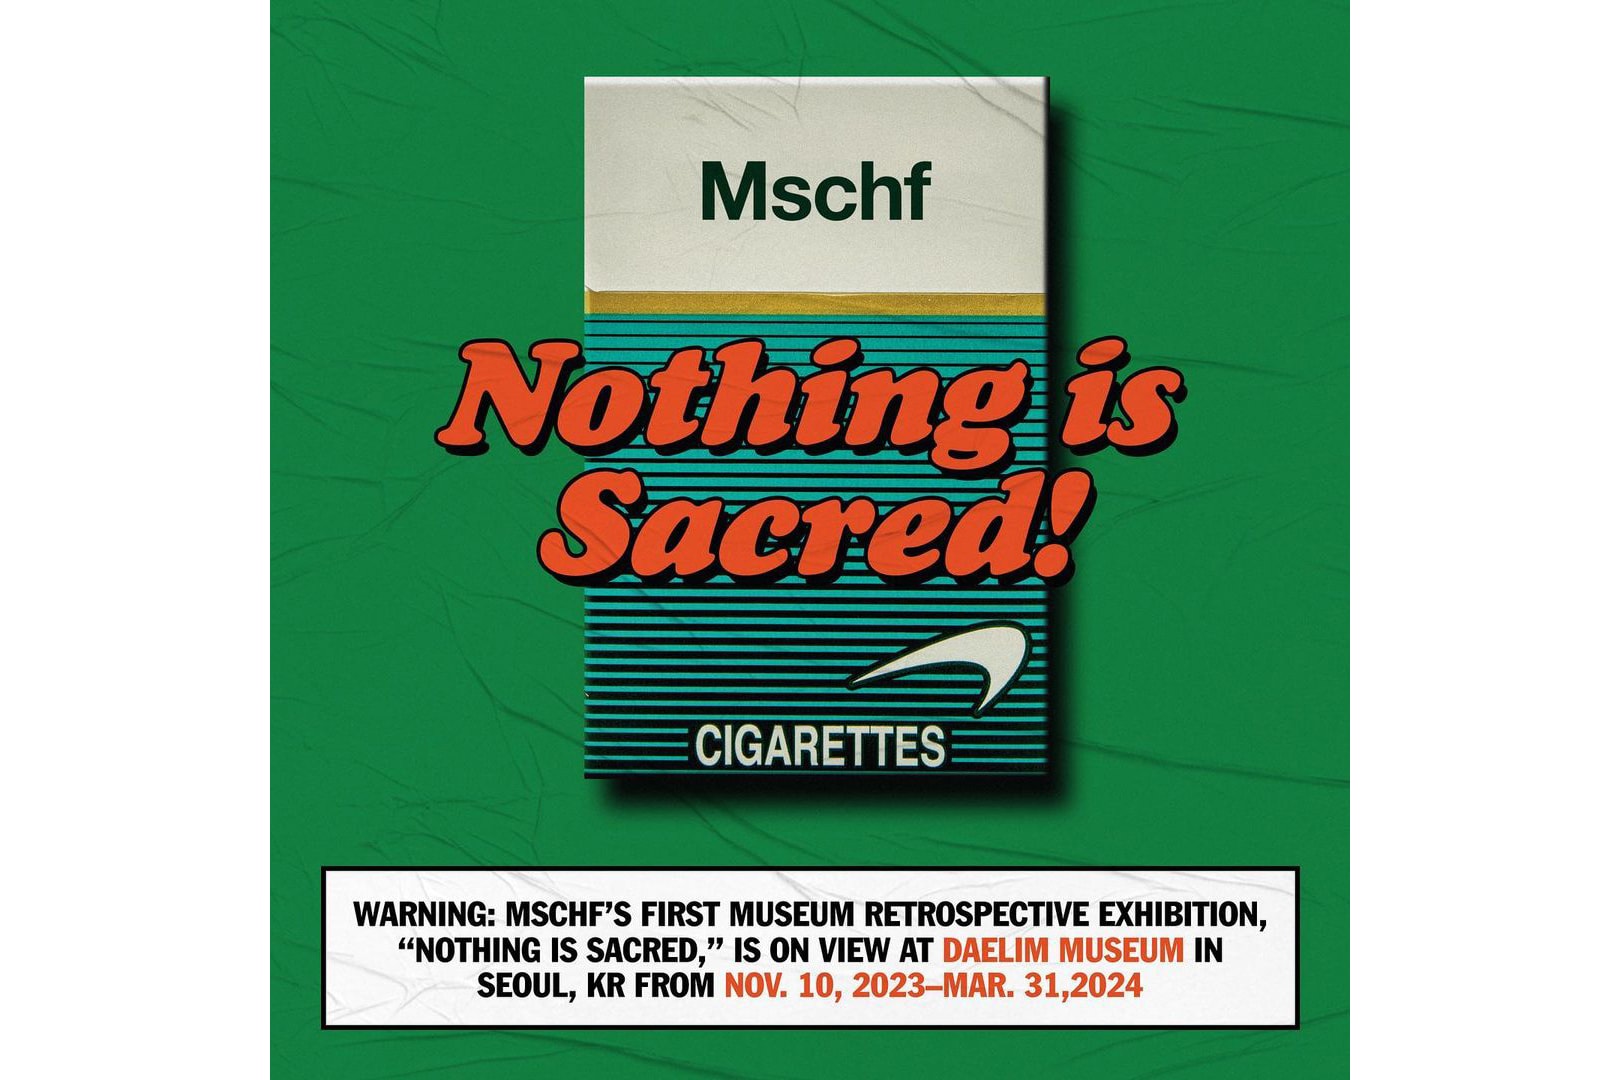 mschf daelim museum seoul retrospective nothing is sacred